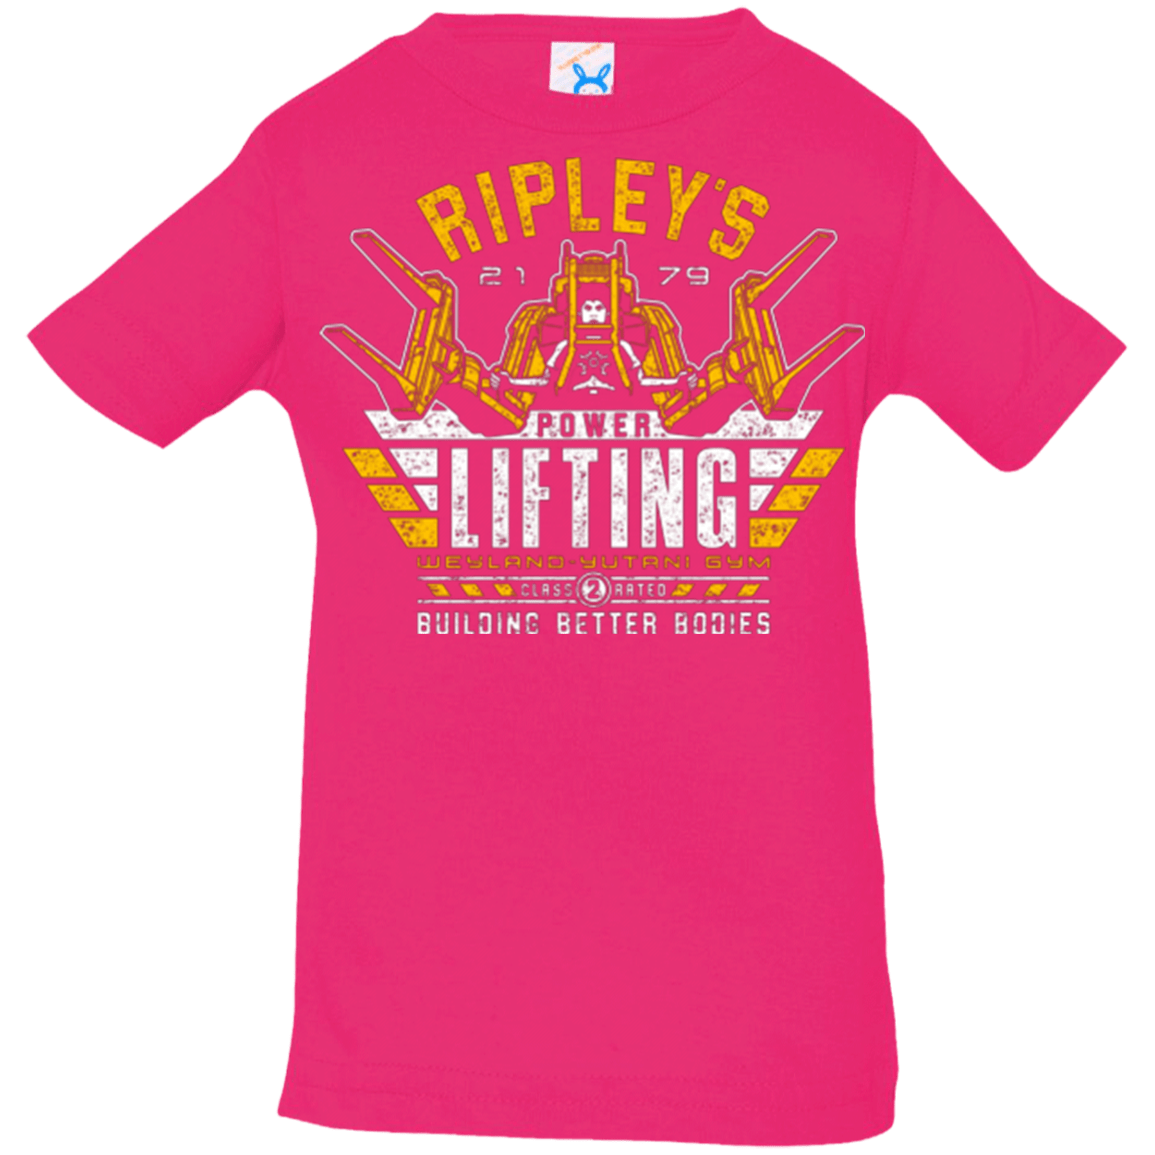 T-Shirts Hot Pink / 6 Months Building Better Worlds (1) Infant Premium T-Shirt